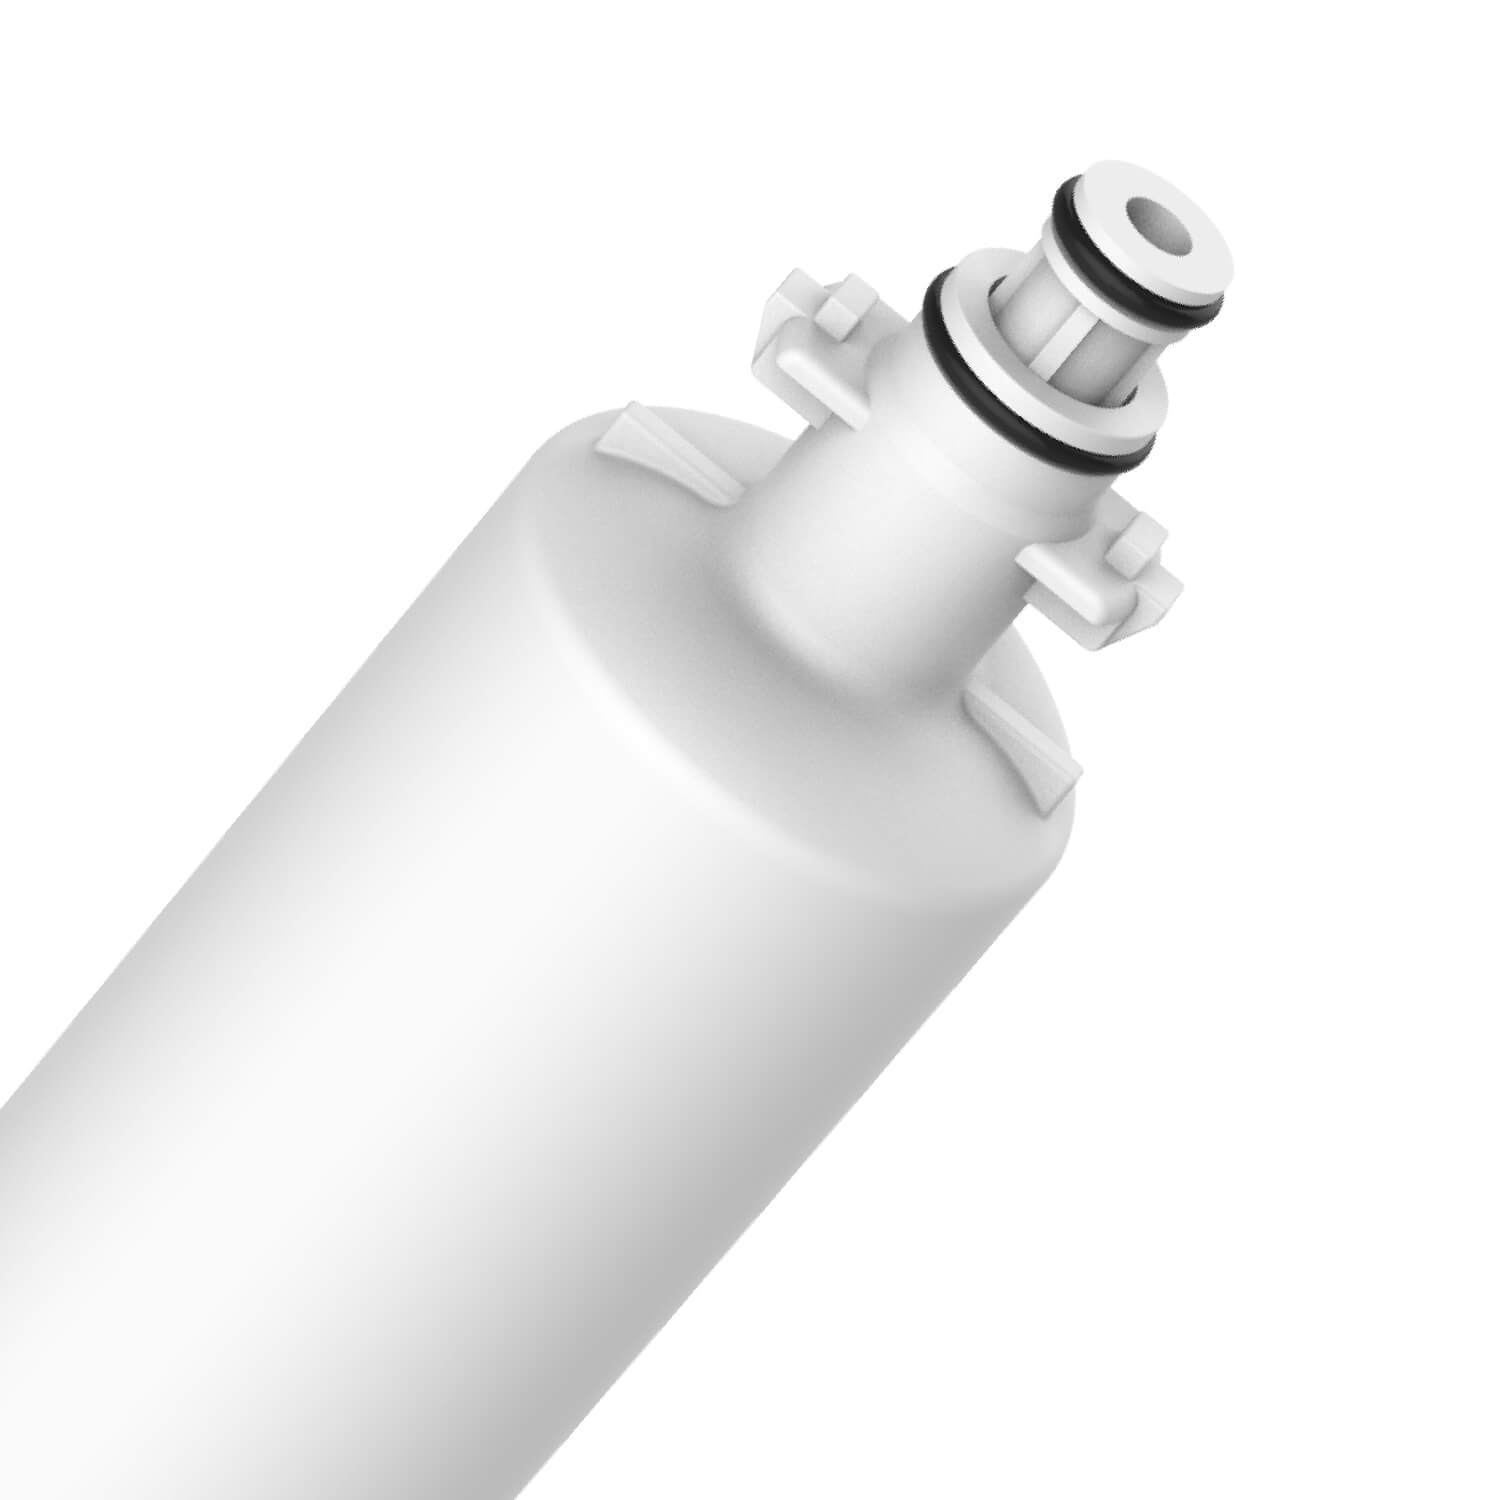 AQUACREST Replacement for LG LT1000P Fridge Water Filter